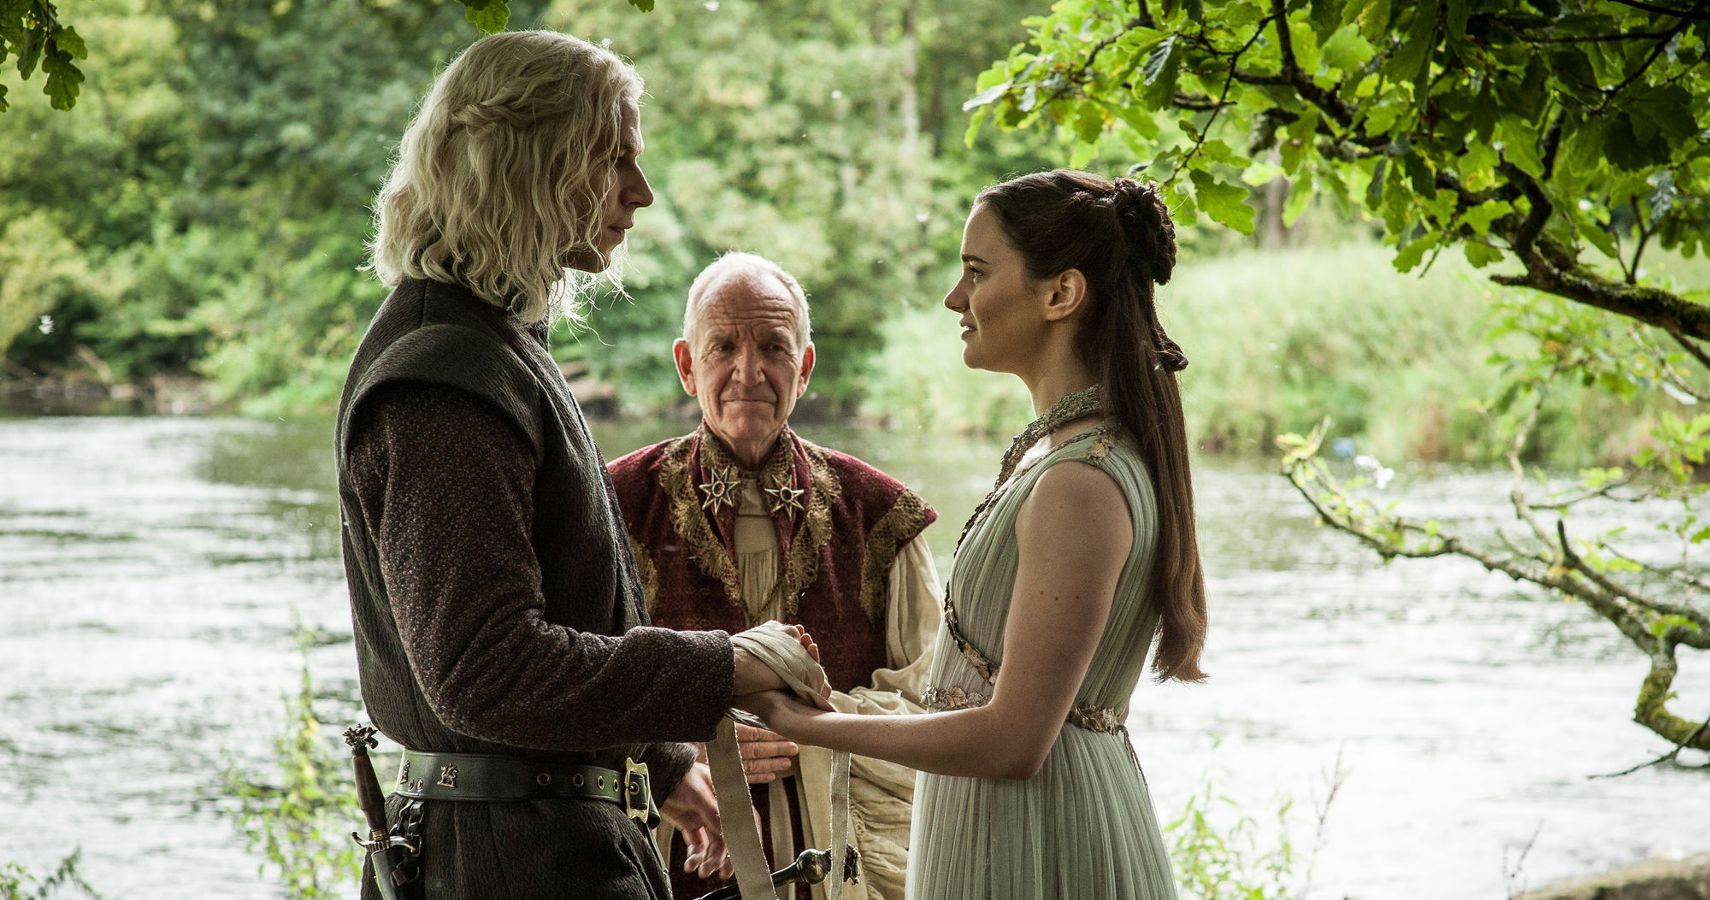 Rhaegar Targaryen and Lyanna Stark